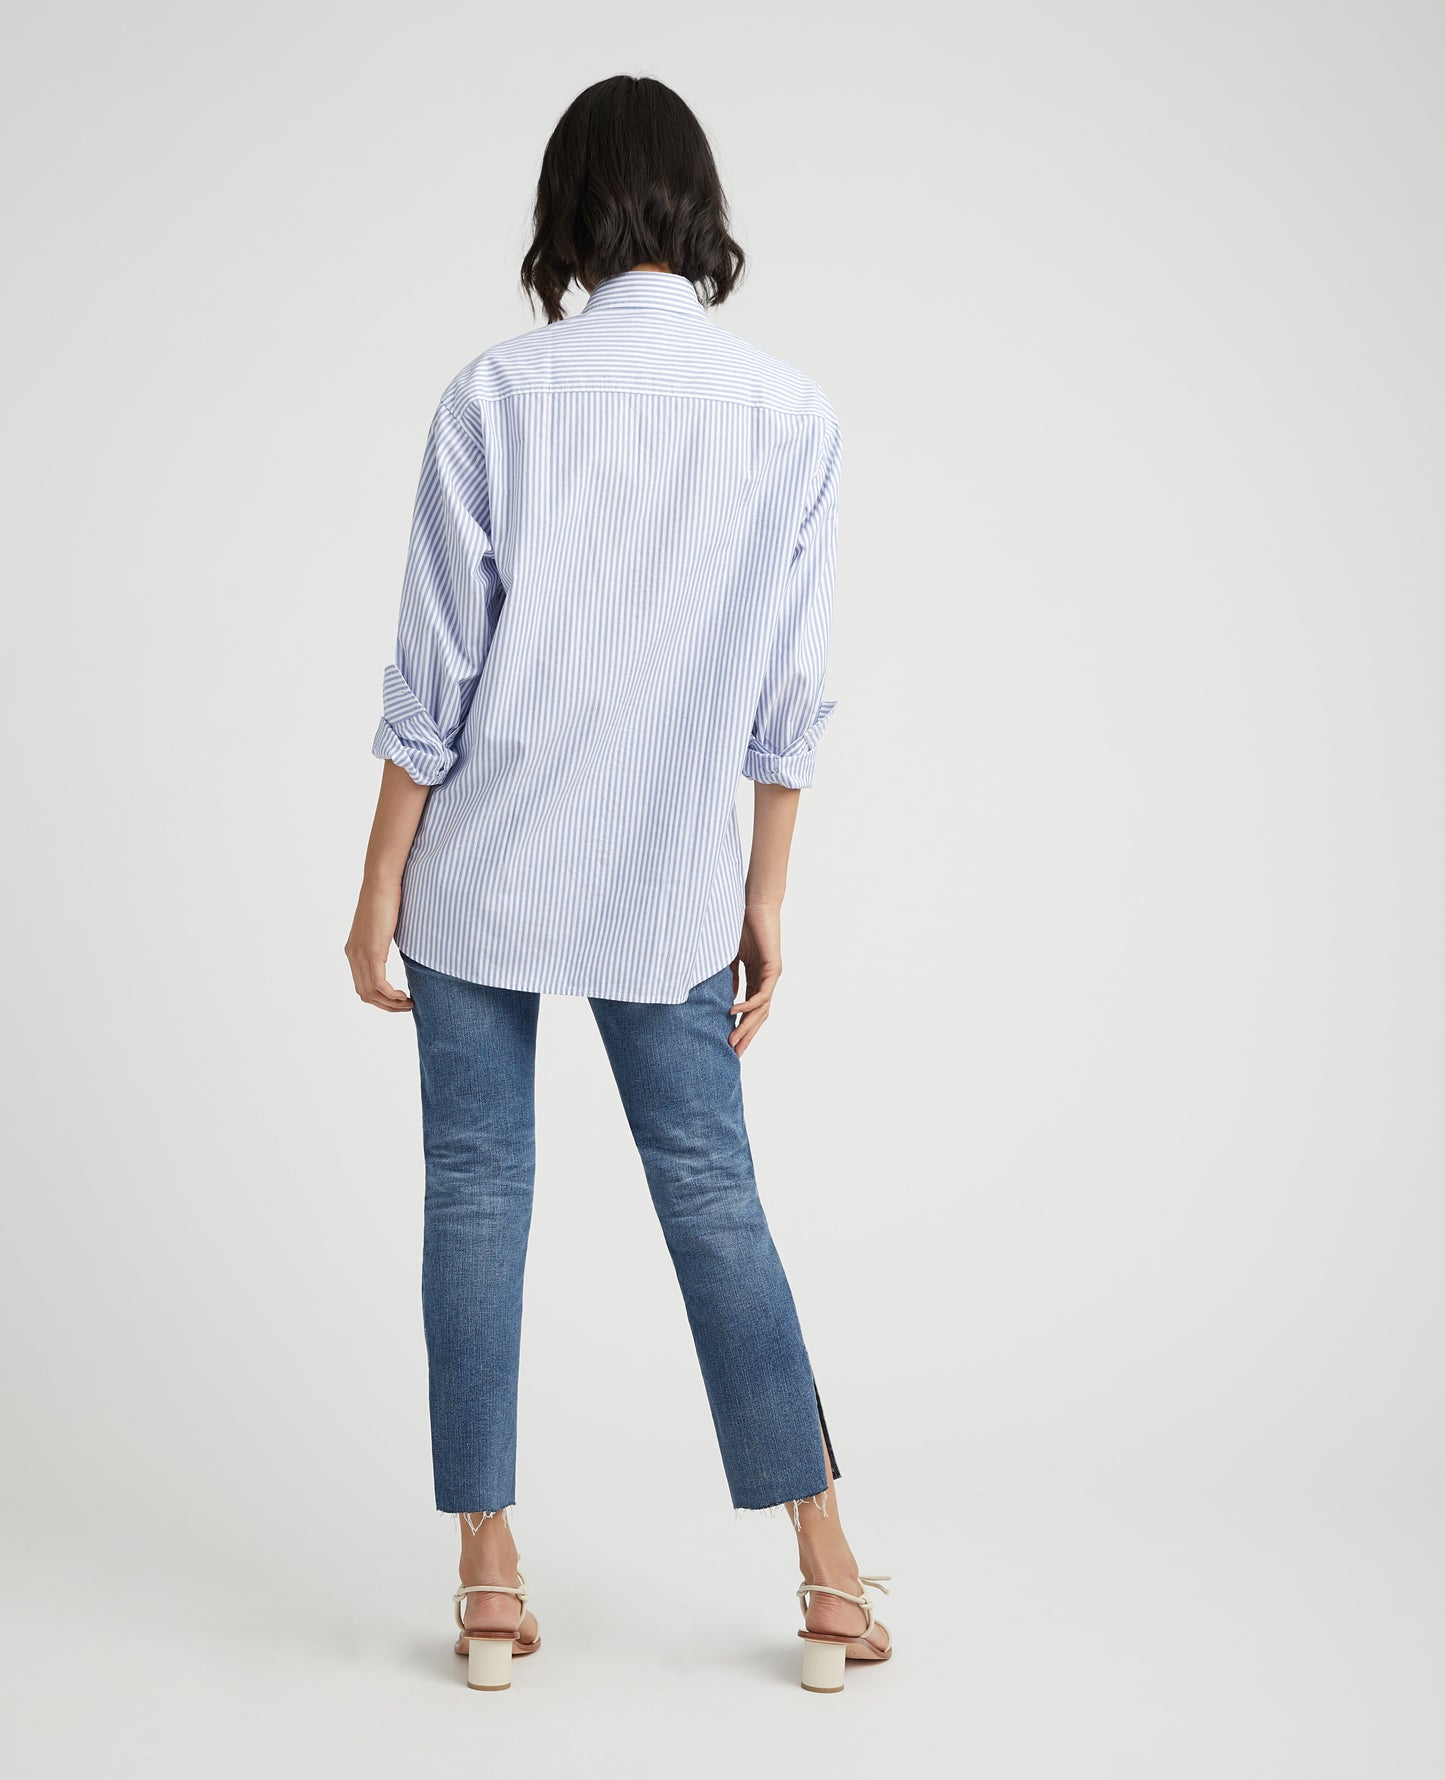 Shiro Shirt True White/Sky Blue Oversized Pocket Shirt Women Tops Photo 7